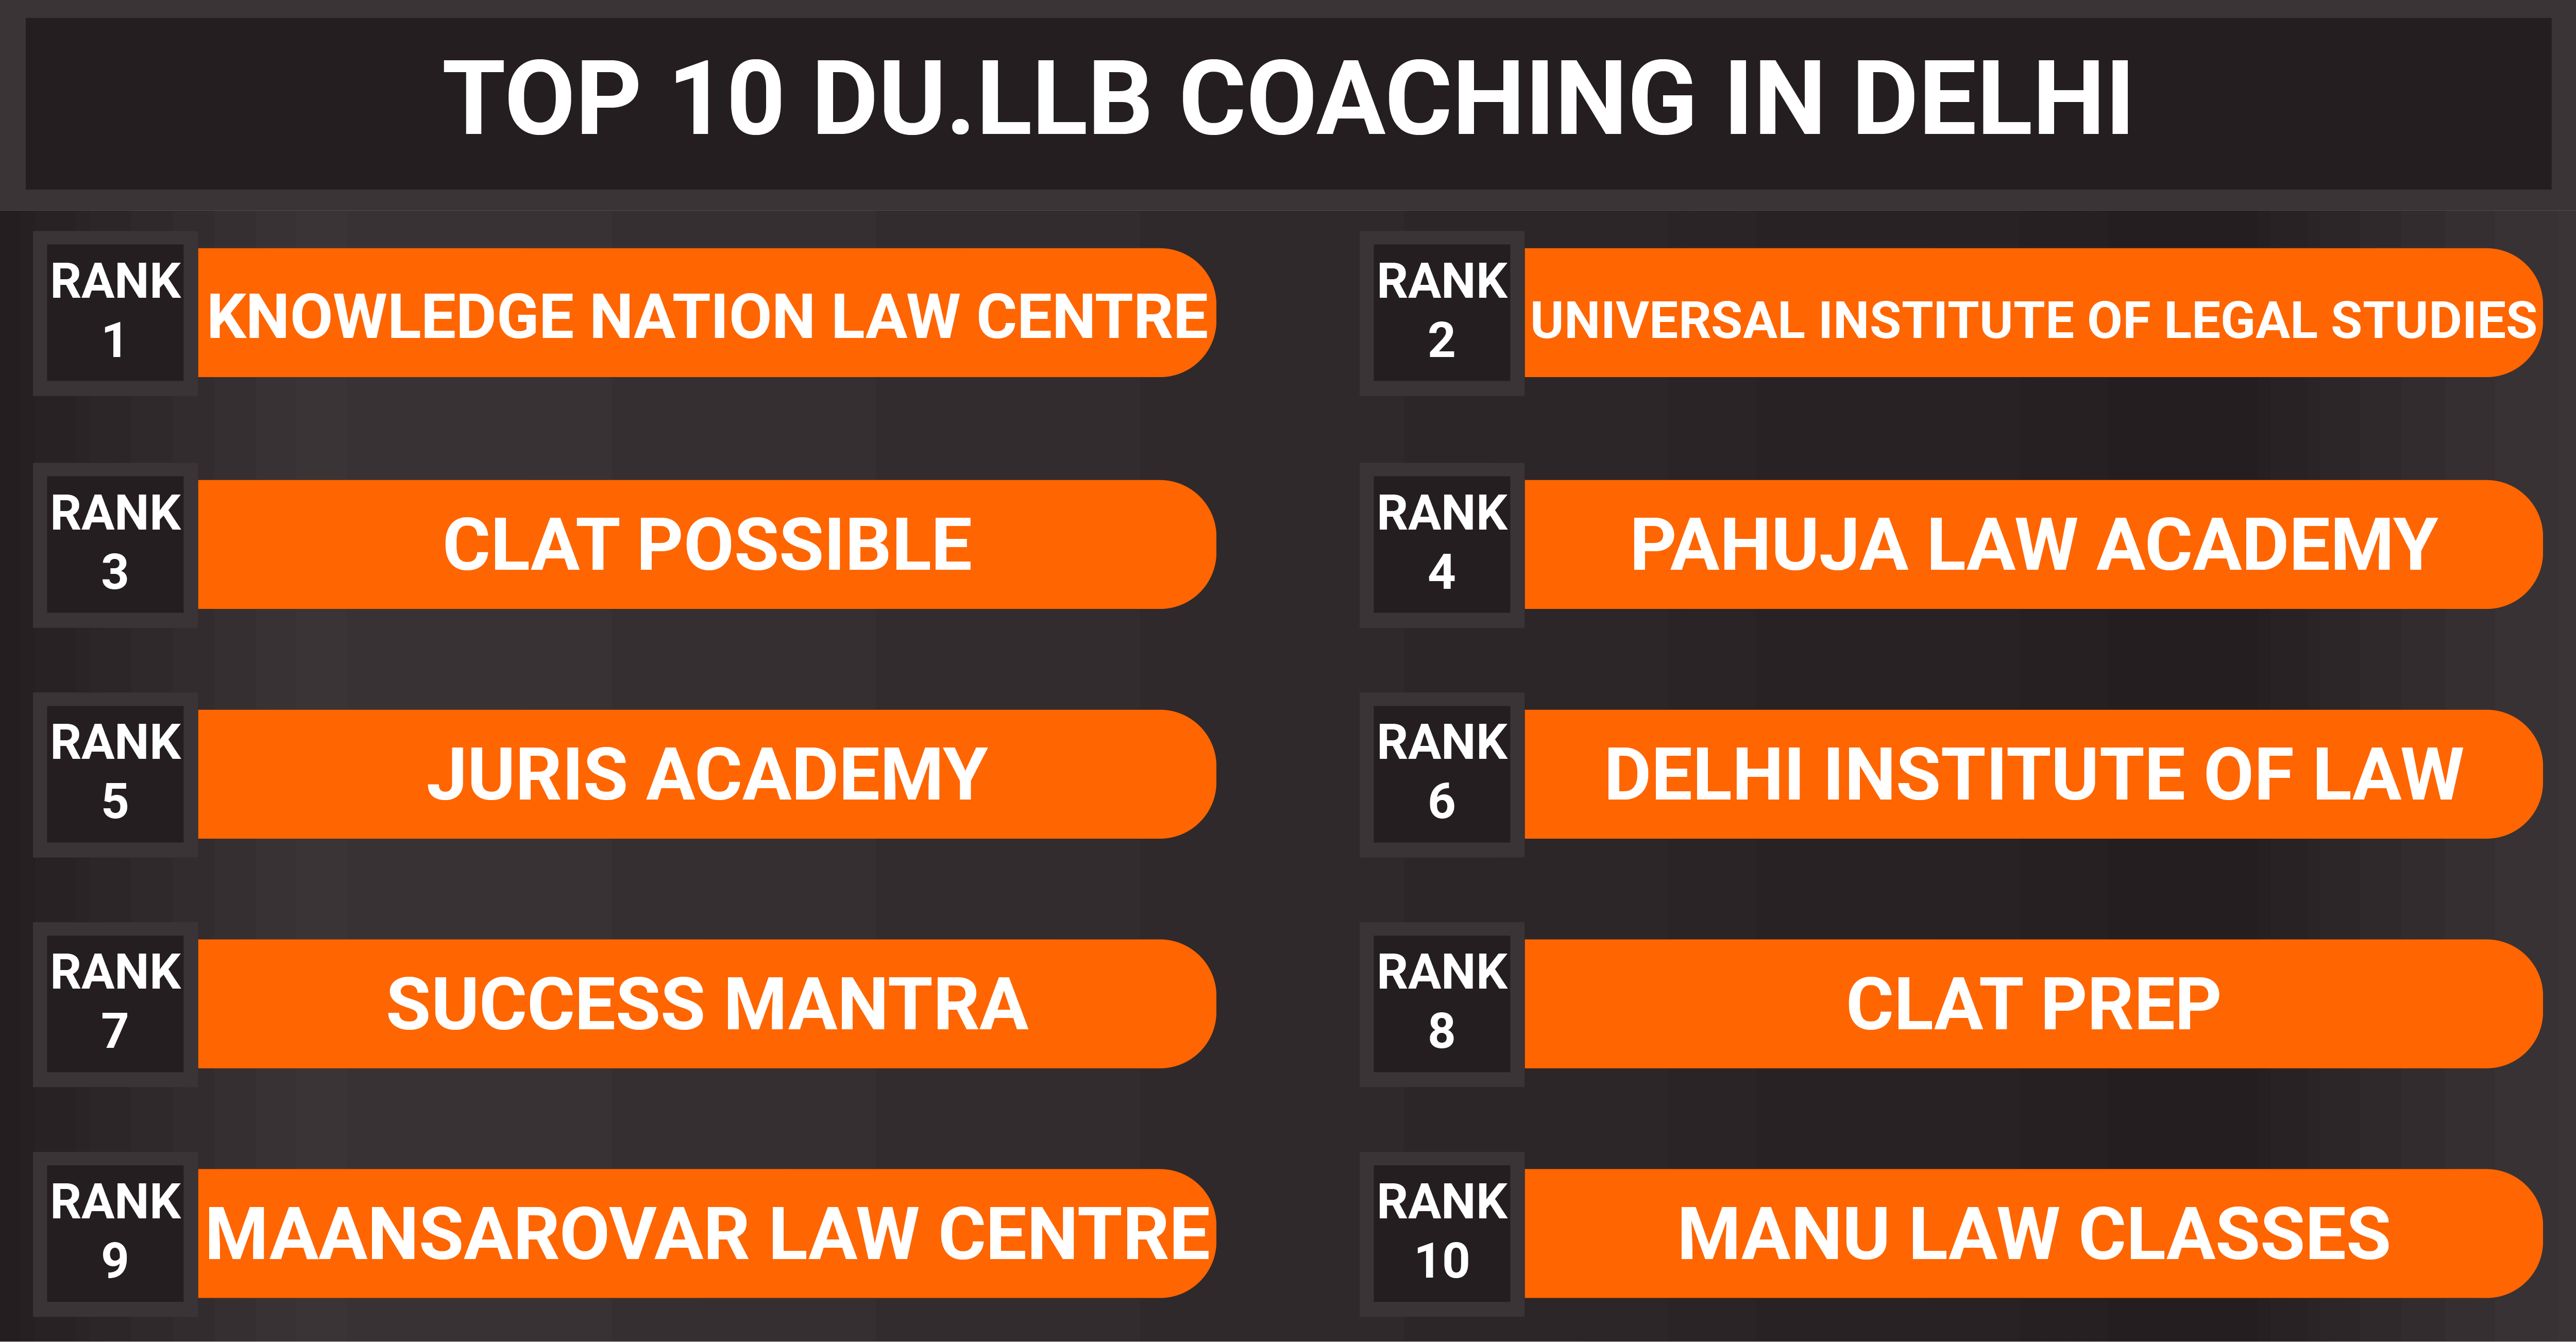 TOP 10 DU.LLB COACHING IN DELHI